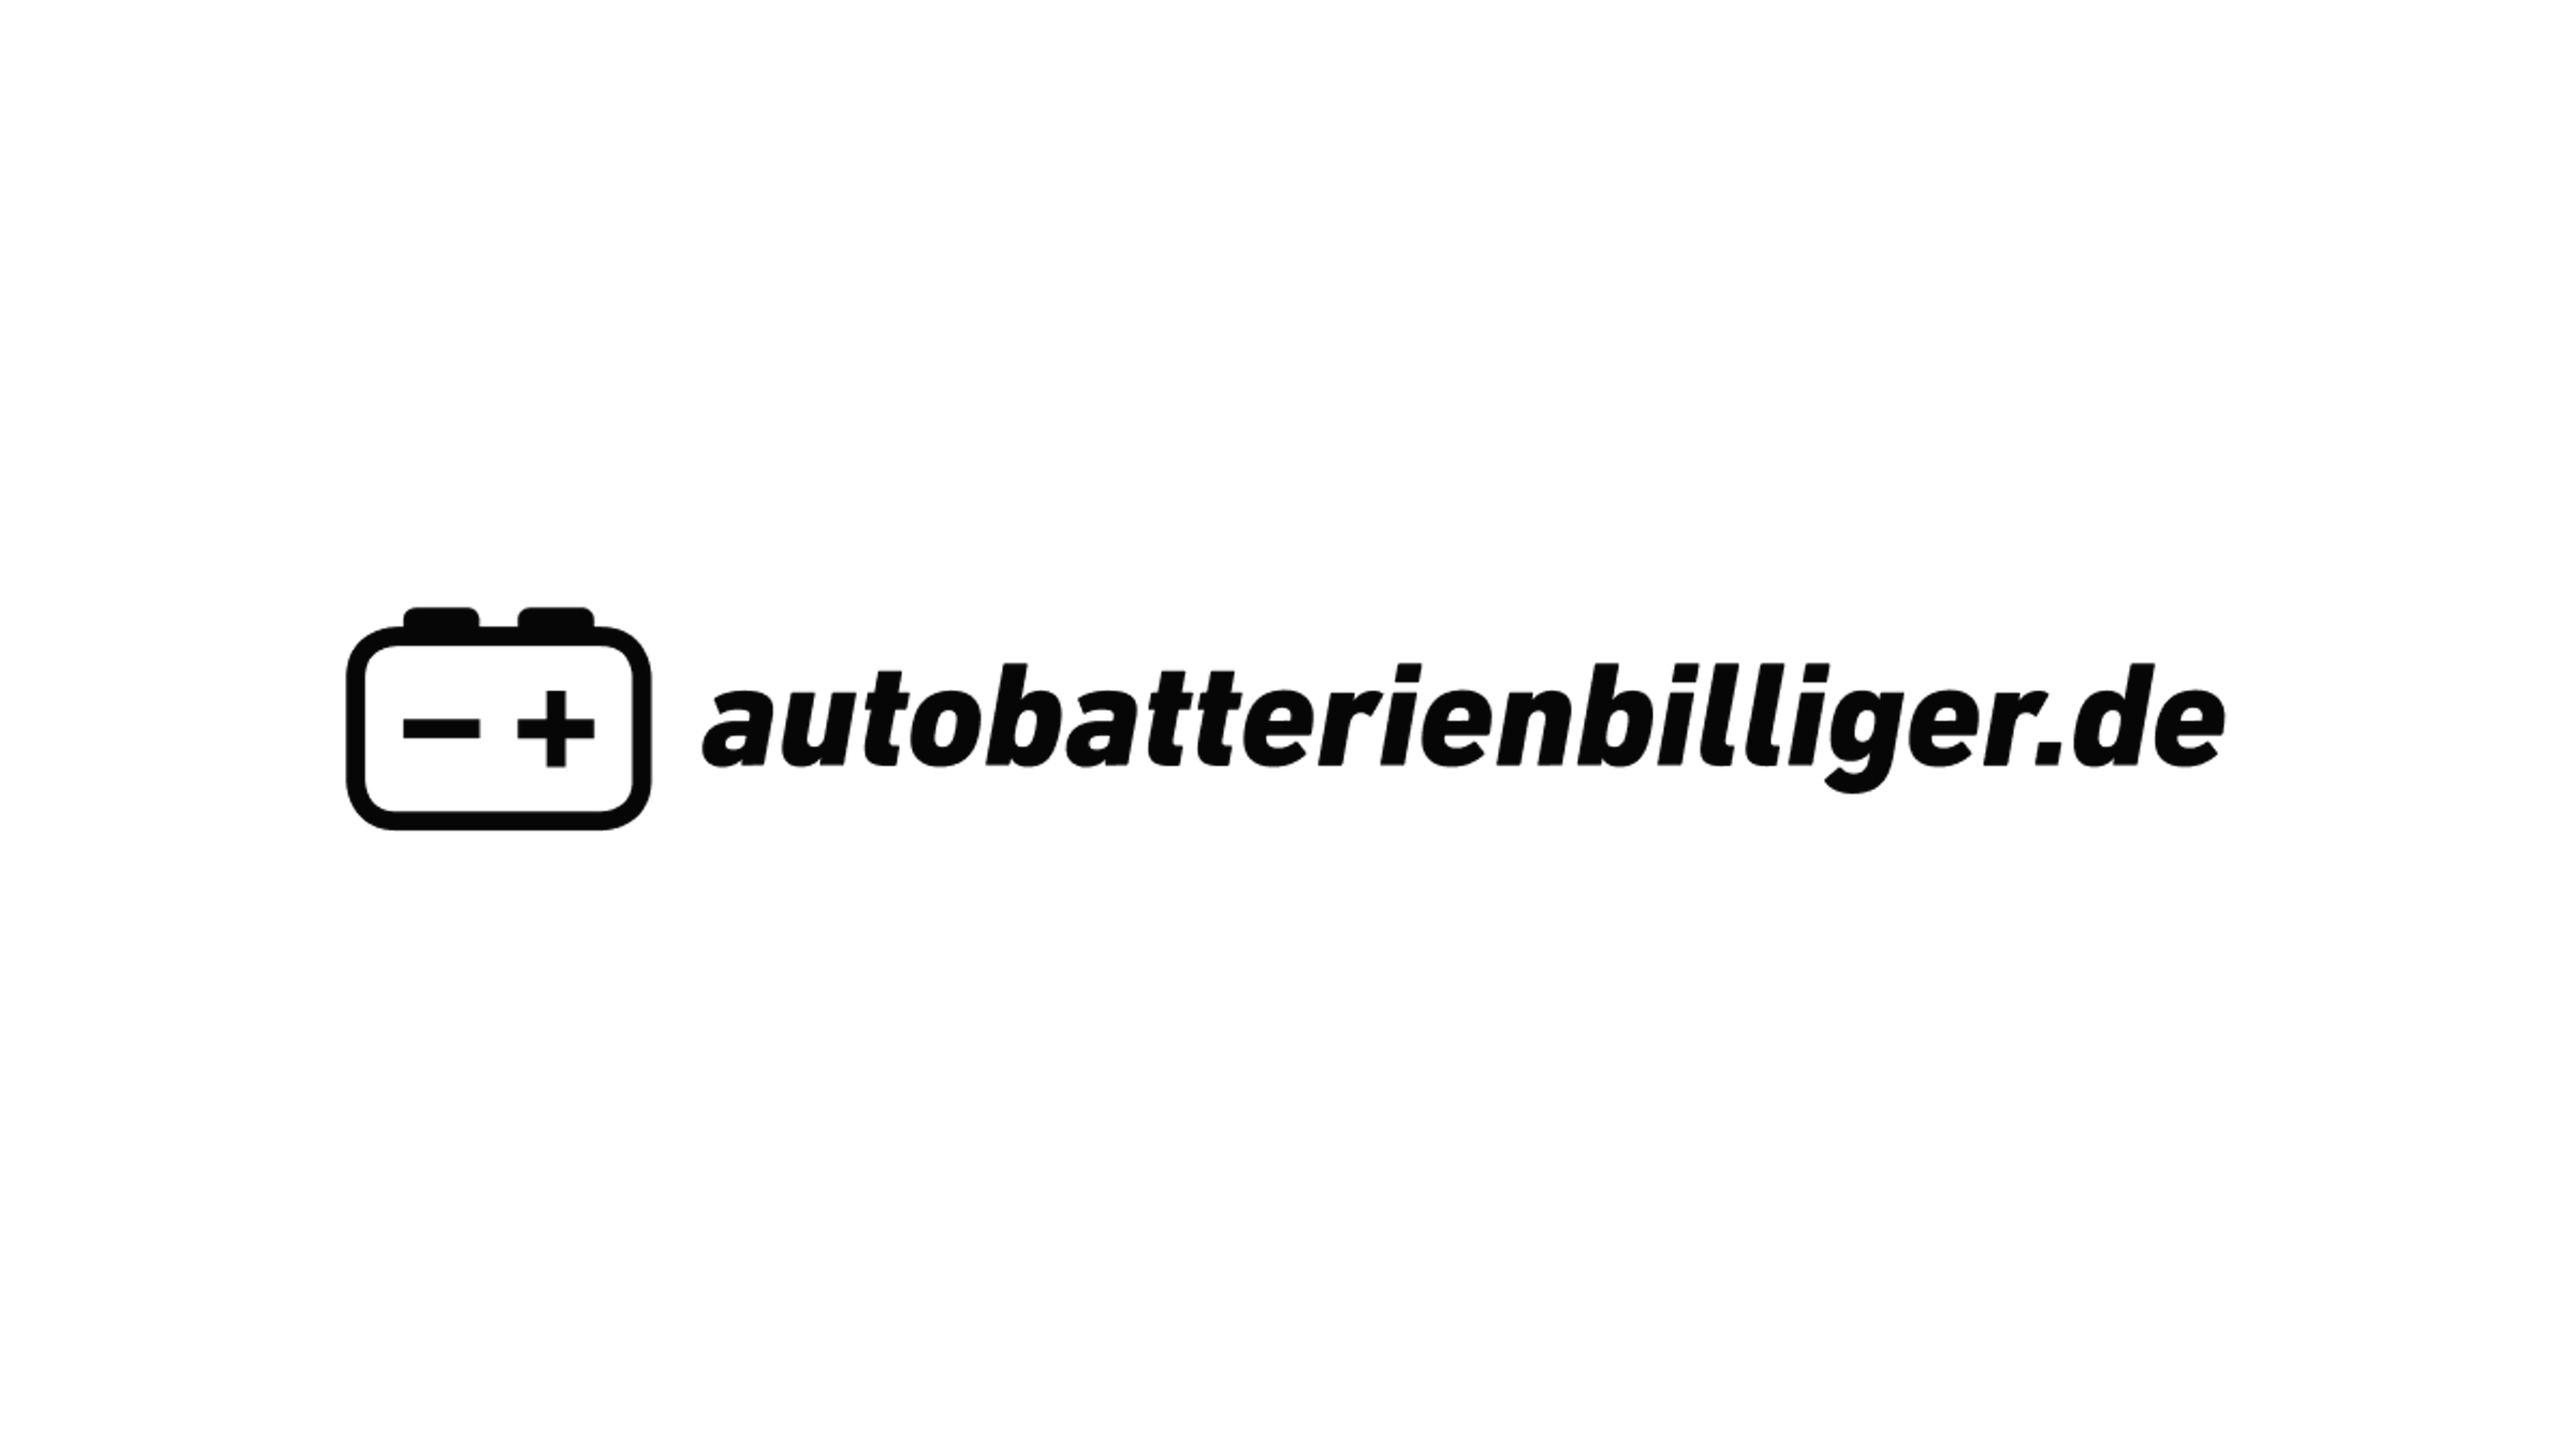 Logo autobatterienbilliger.de